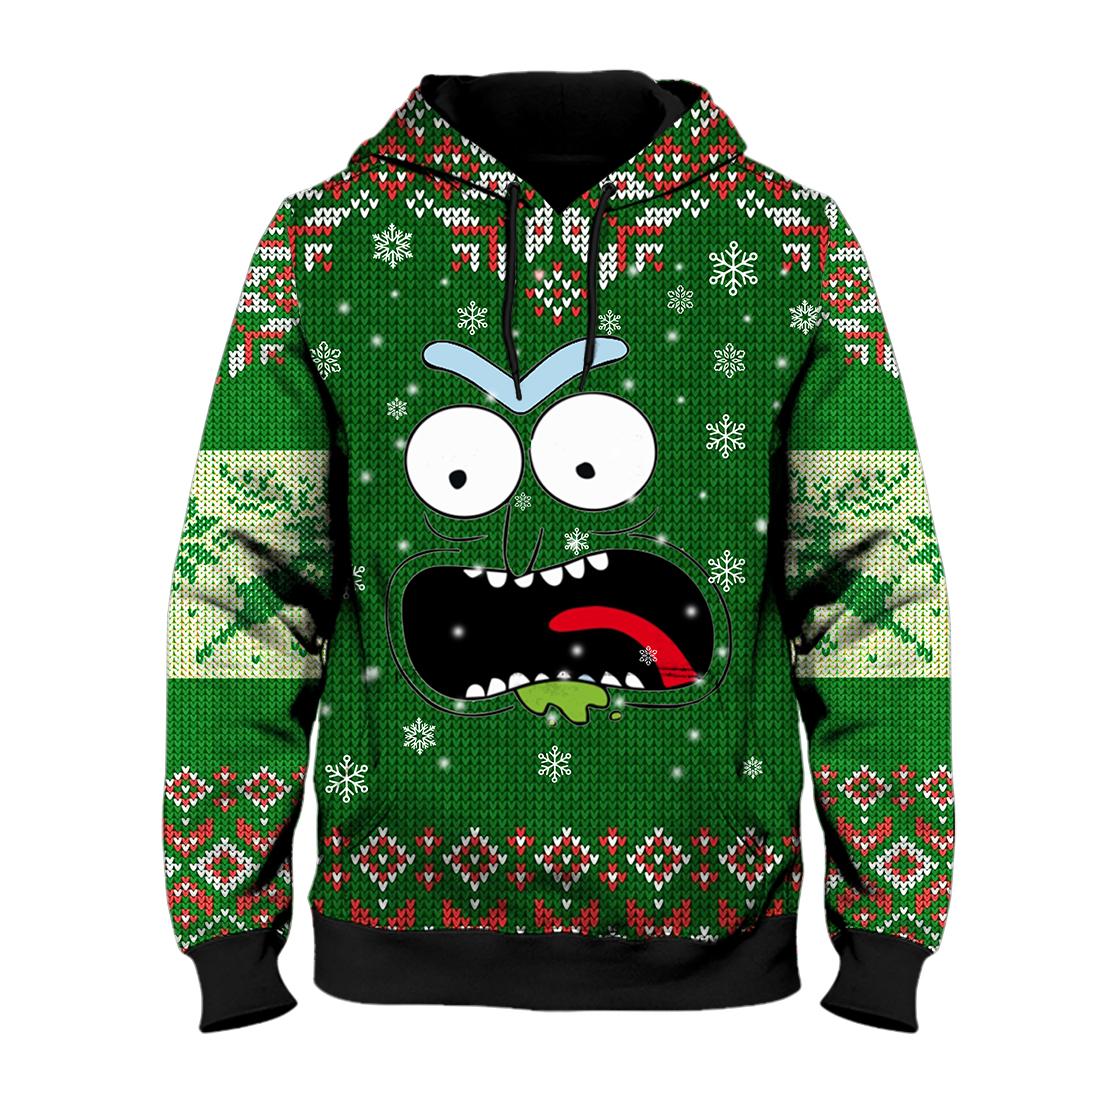 Rick face ugly christmas all over print hoodie - original